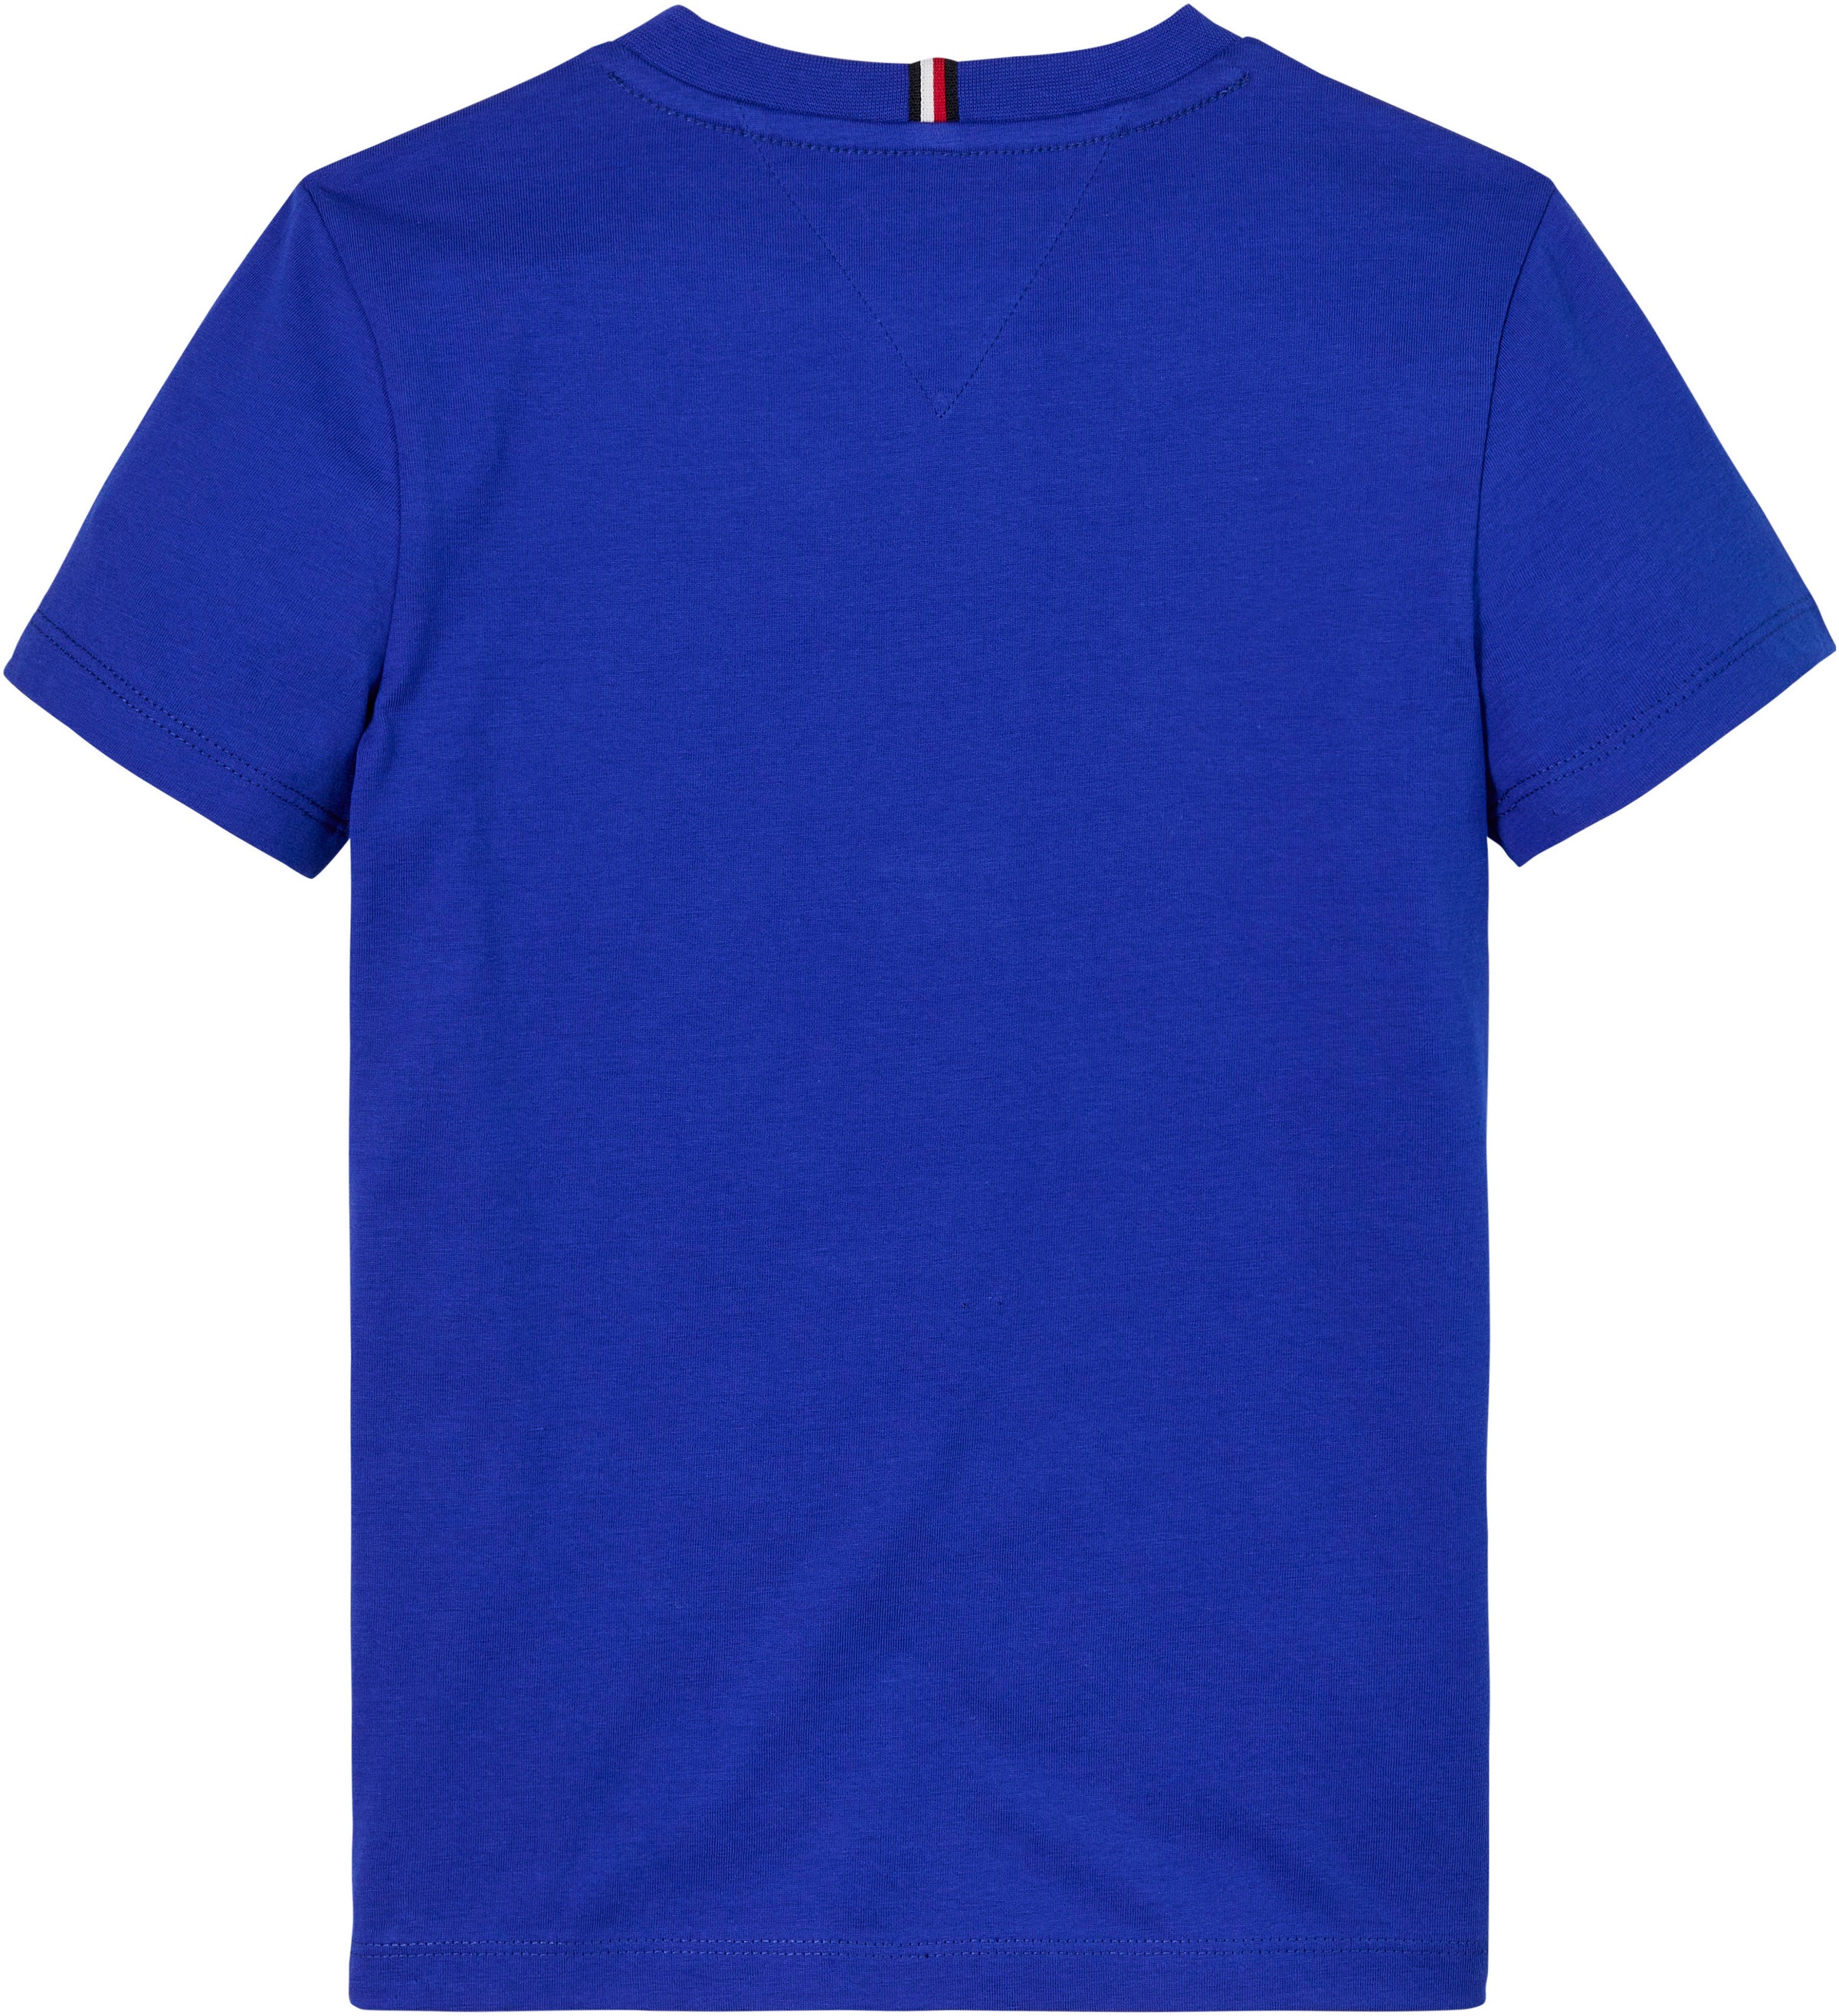 Tommy Hilfiger T-Shirt »TH LOGO TEE S/S«, mit großem TH-Logo